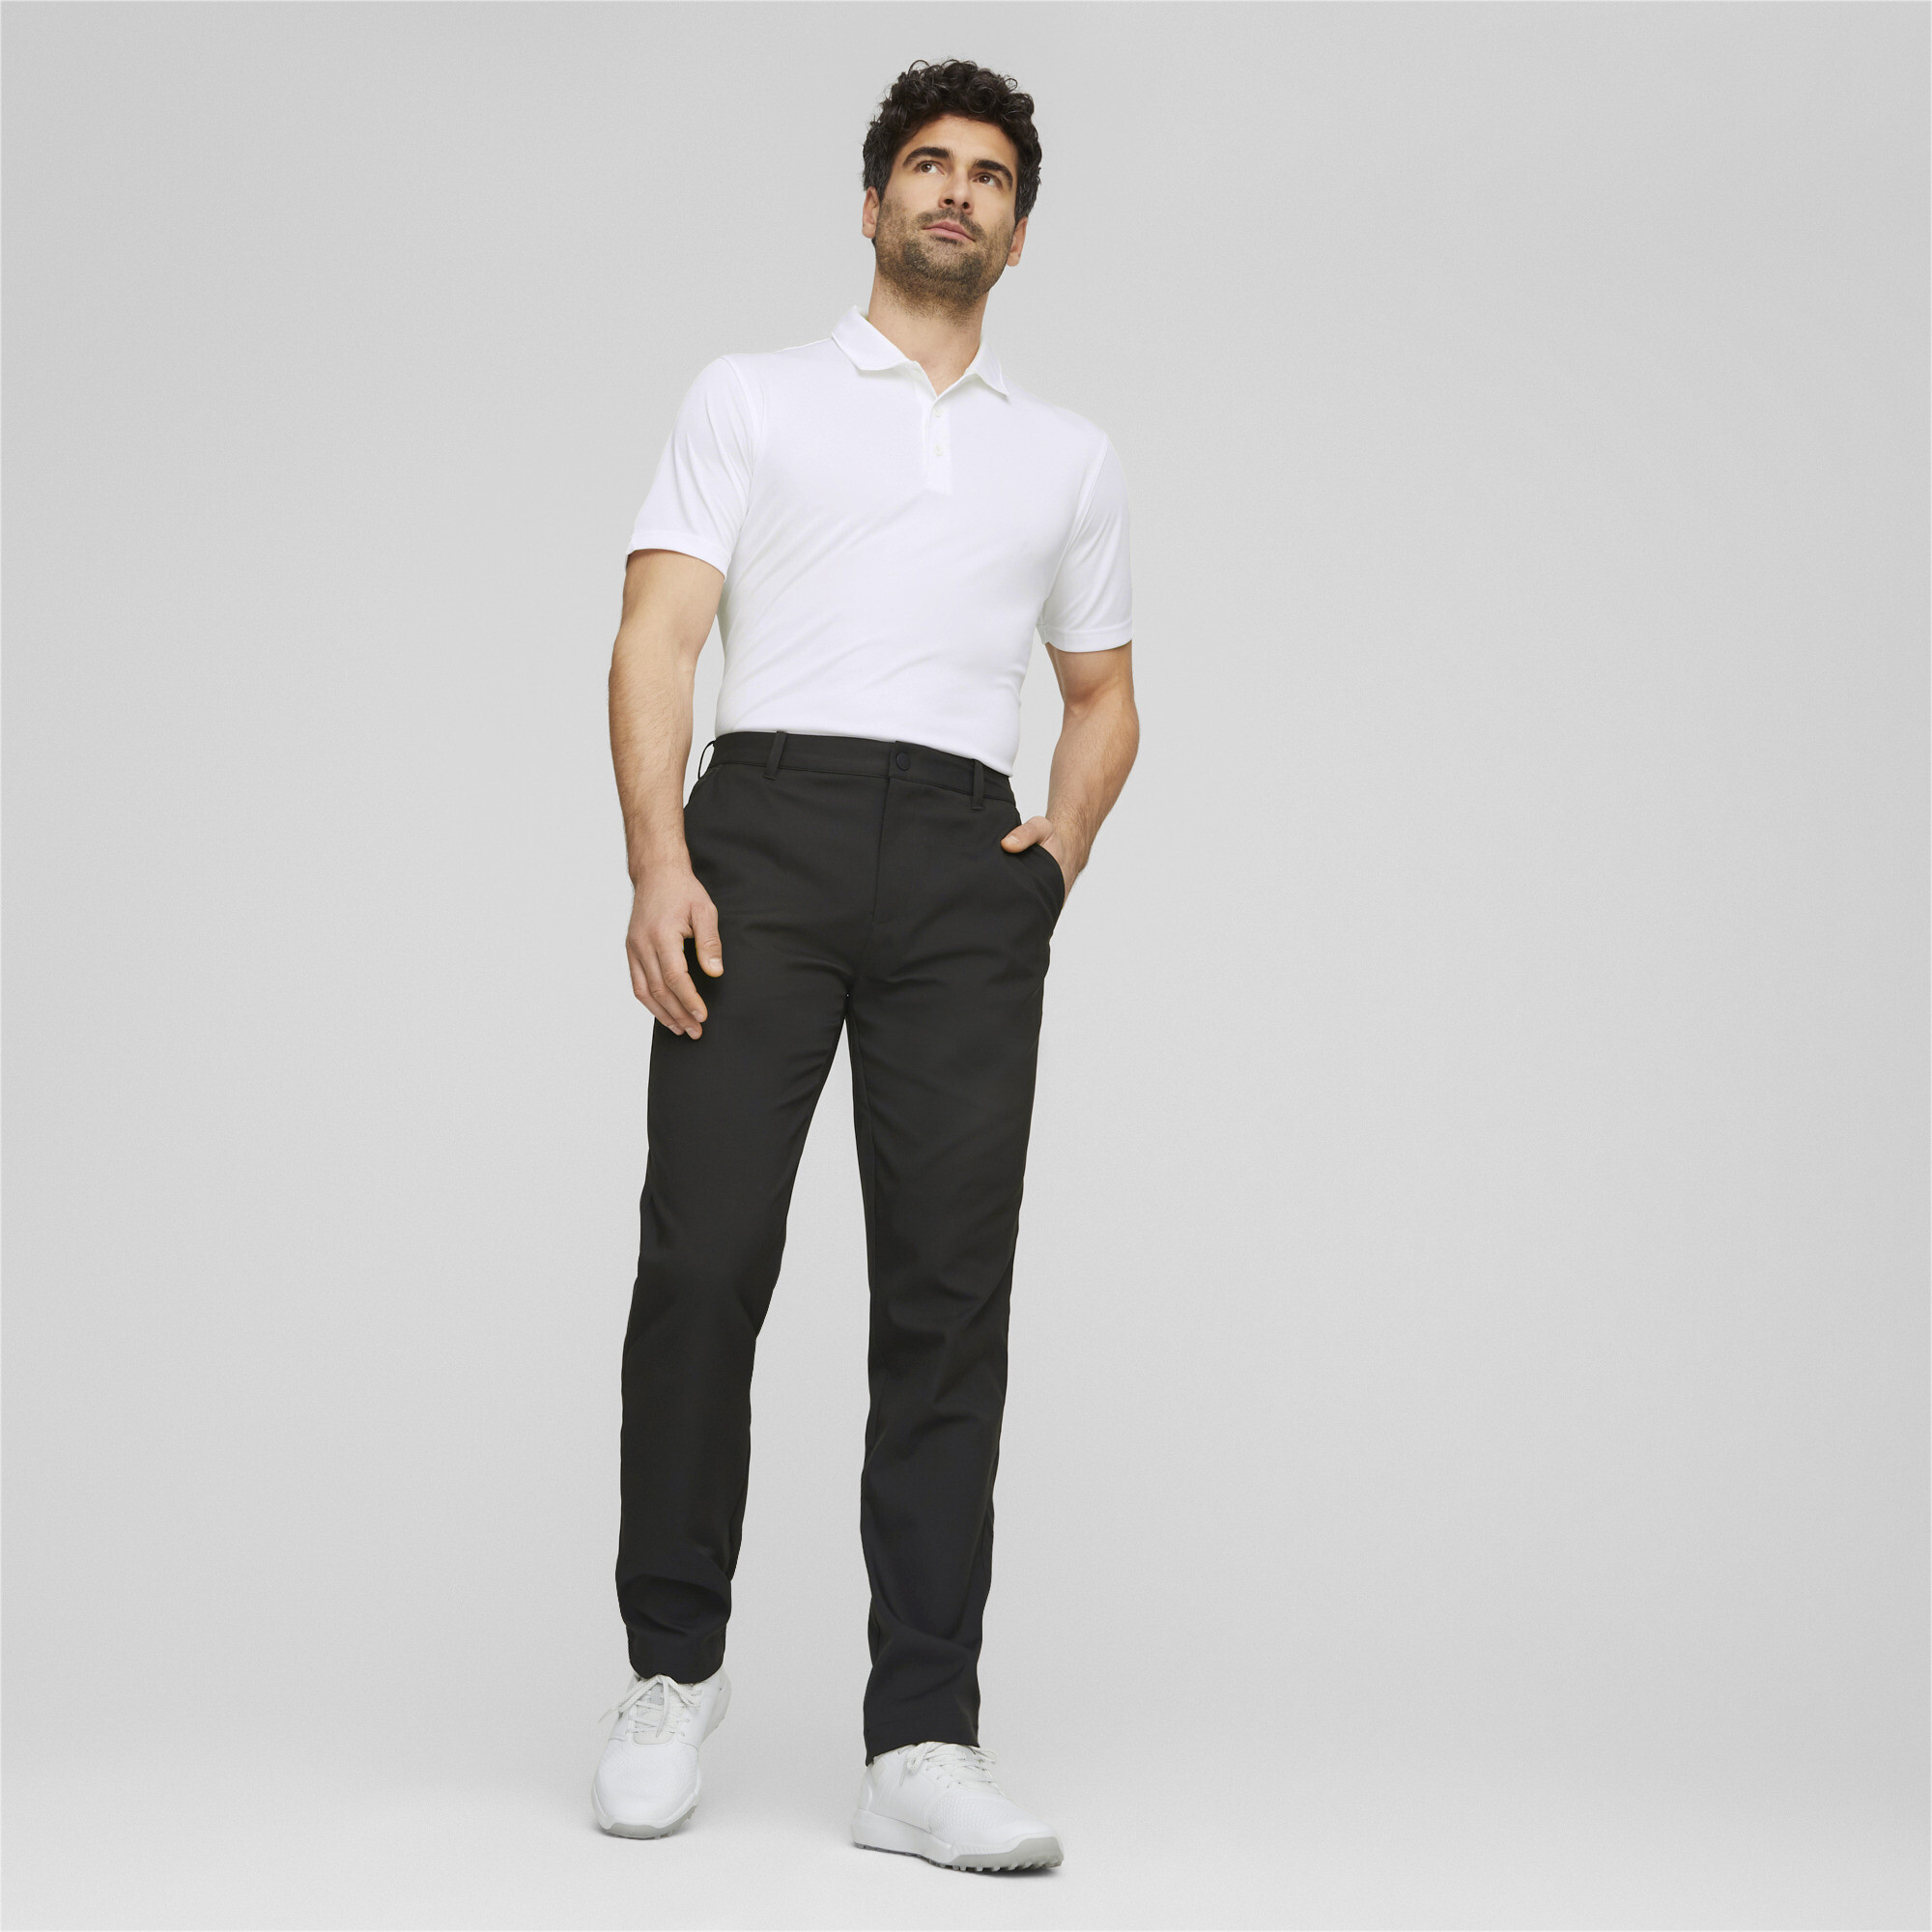 Men's Puma Dealer Golf Pants, Black, Size 38/36, Clothing